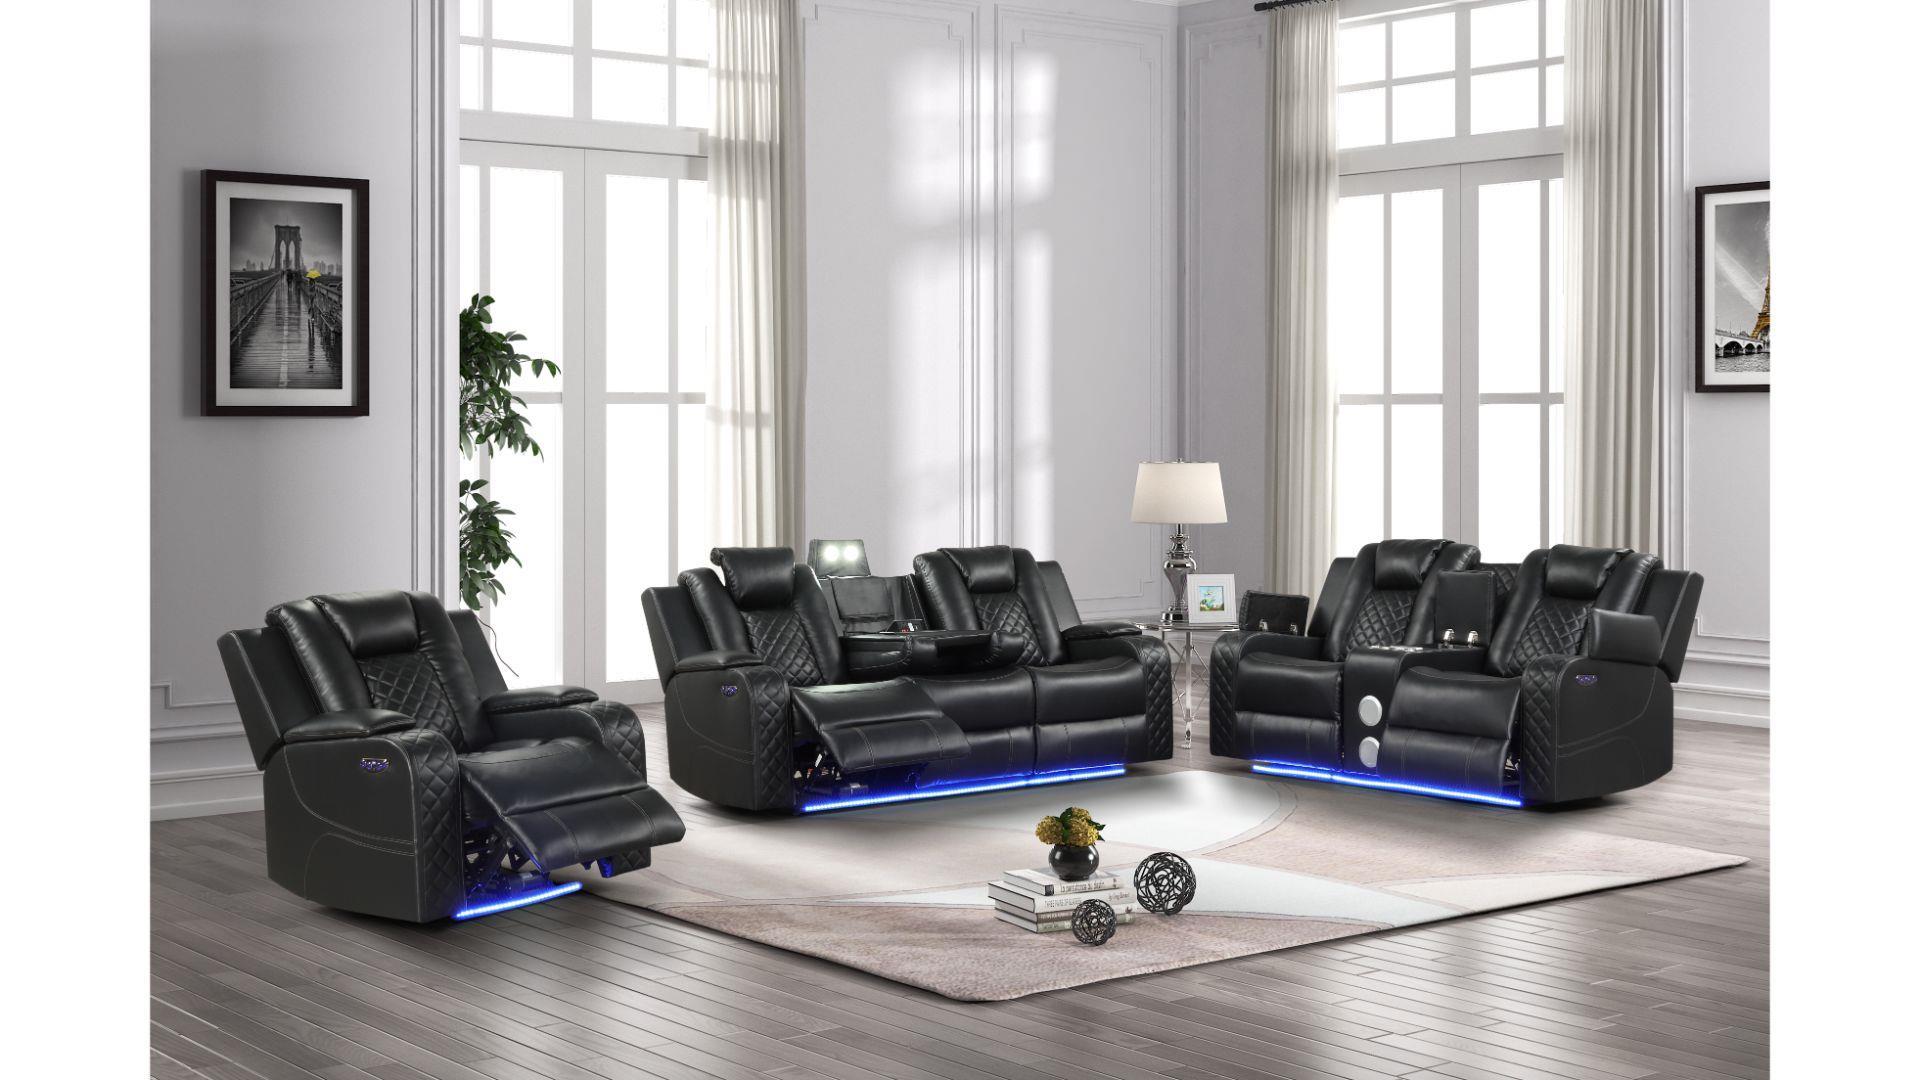 

        
Galaxy Home Furniture BENZ Black Recliner Sofa Set Black Faux Leather 659436330924
